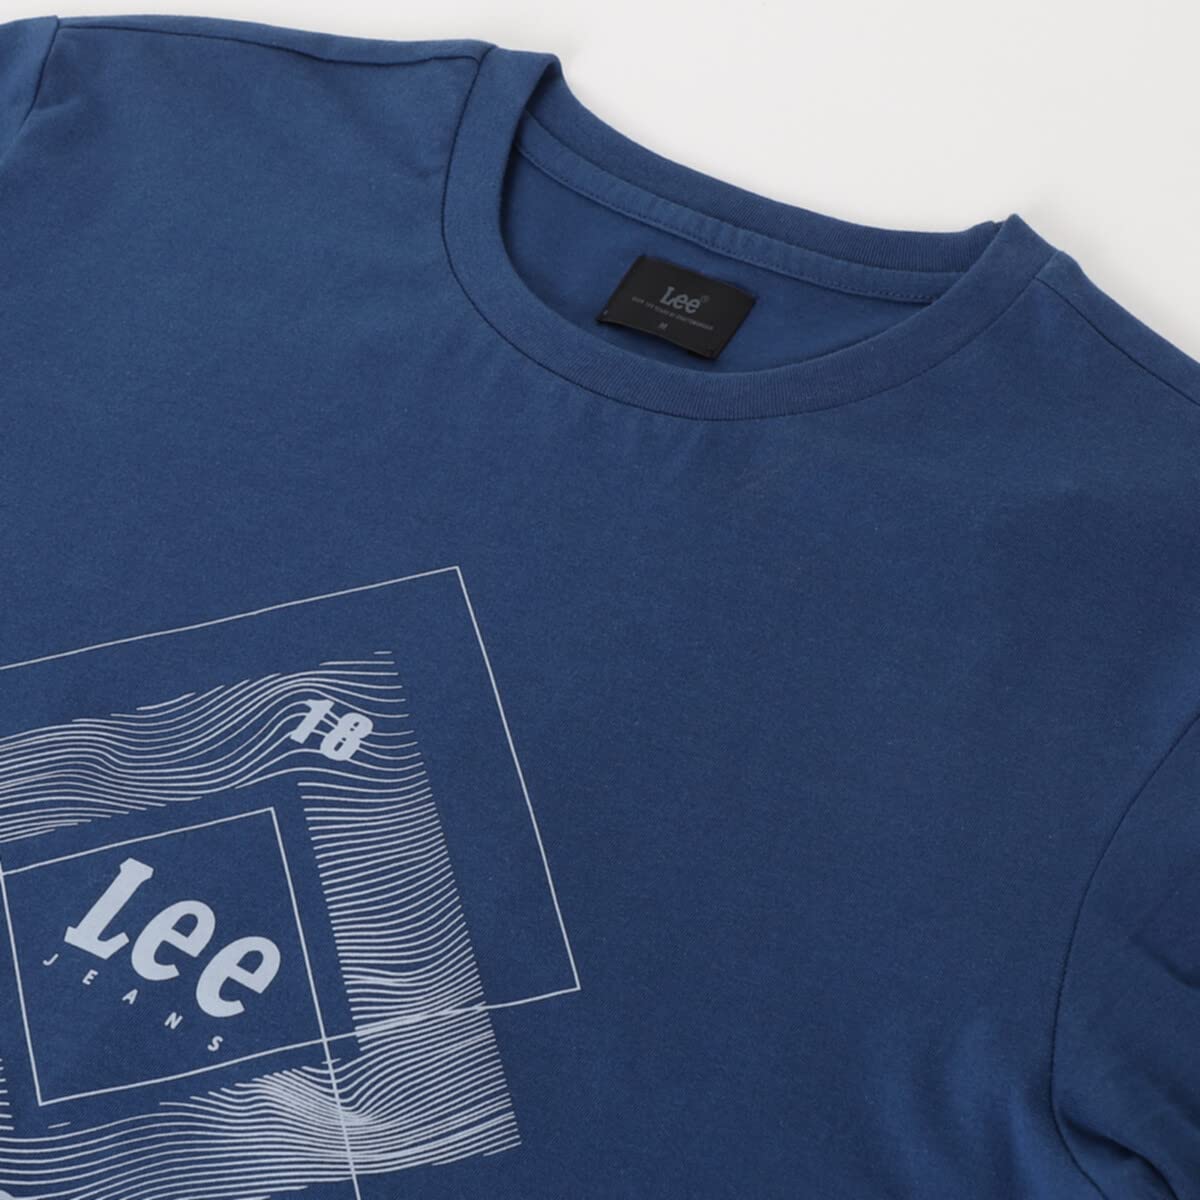 Lee Men's Graphic Slim Fit T-Shirt (LMTS004556_Navy